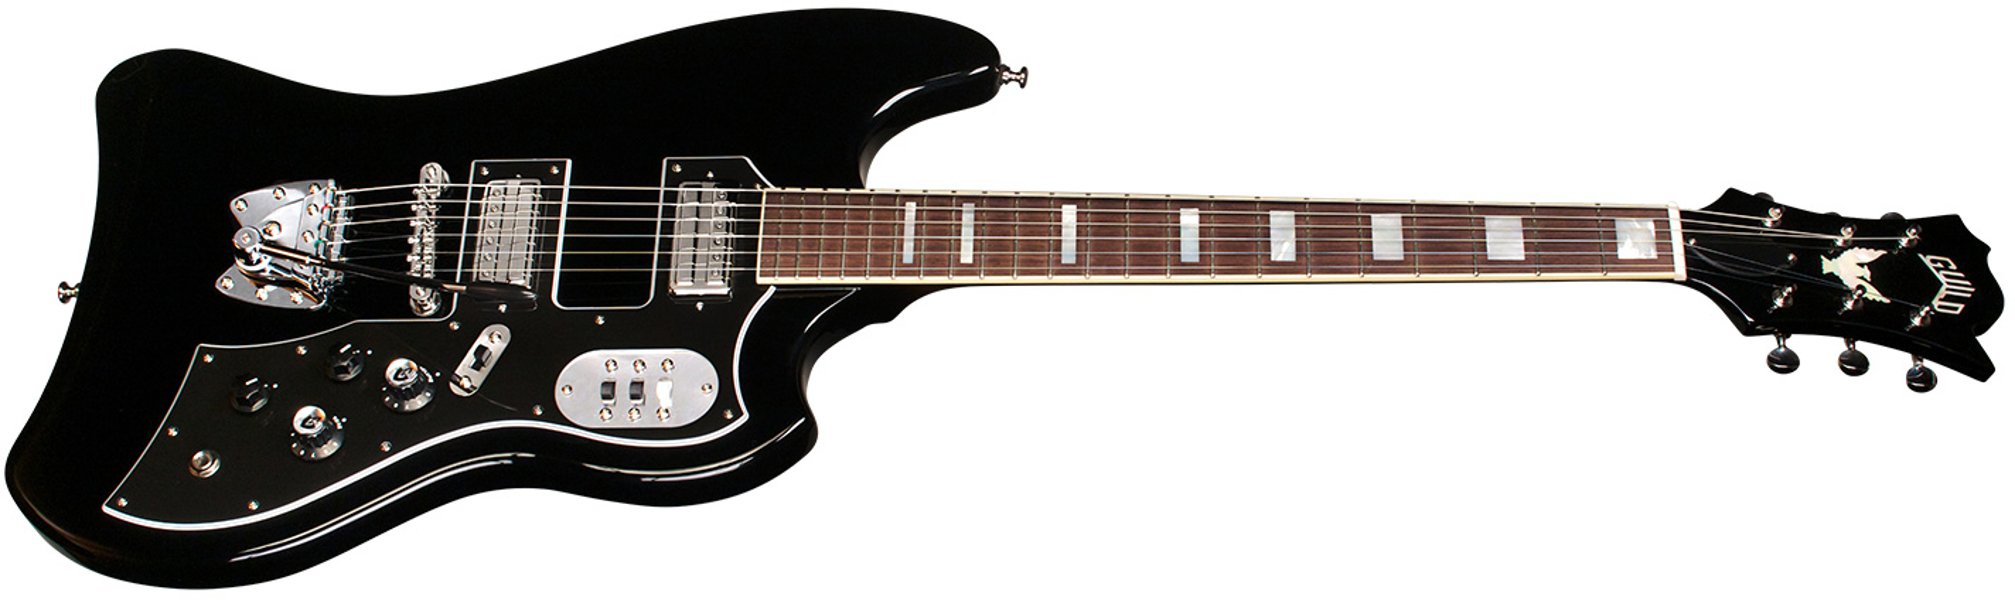 Guild S-200 T-bird - Noir - Guitarra electrica retro rock - Variation 2